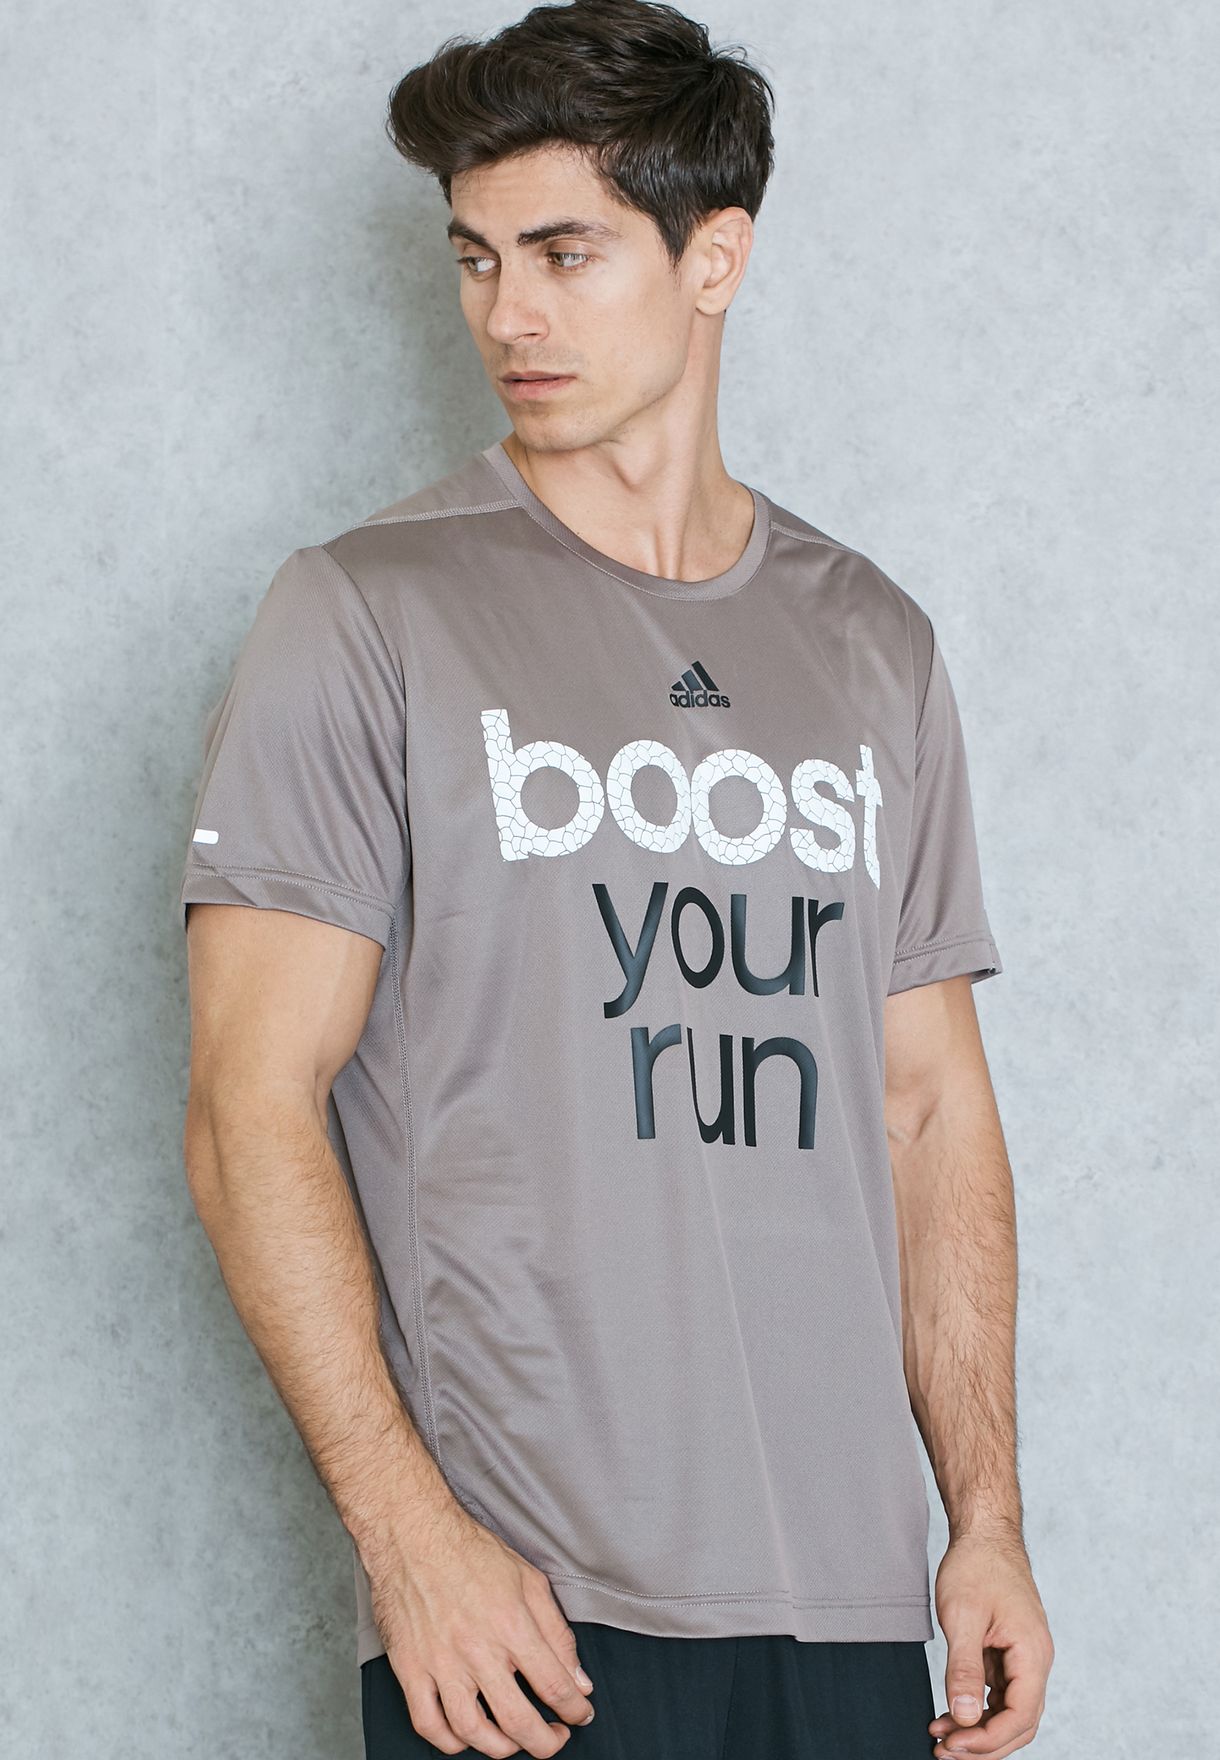 adidas boost your run